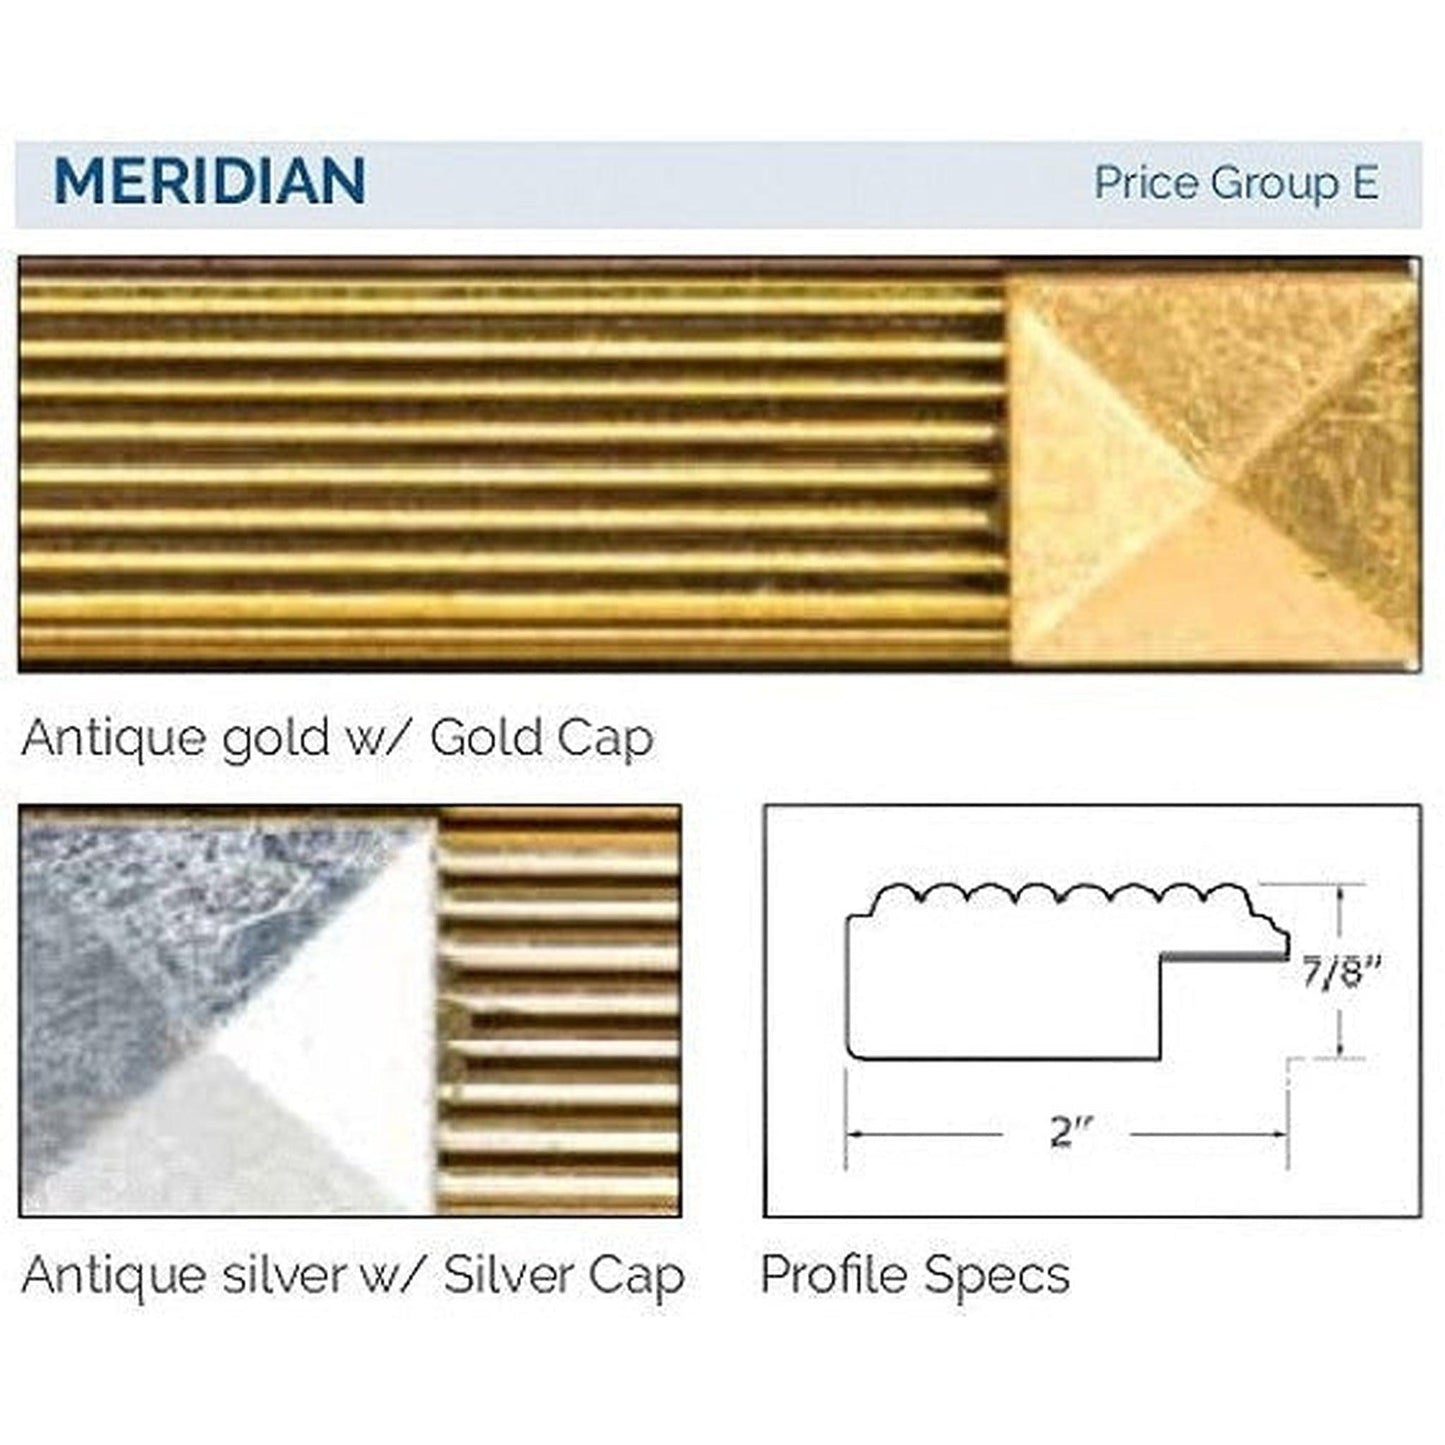 Afina Signature 58" x 30" Meridian Antique Silver with Antique Gold Caps Recessed Four Door Medicine Cabinet With Beveled Edge Mirror